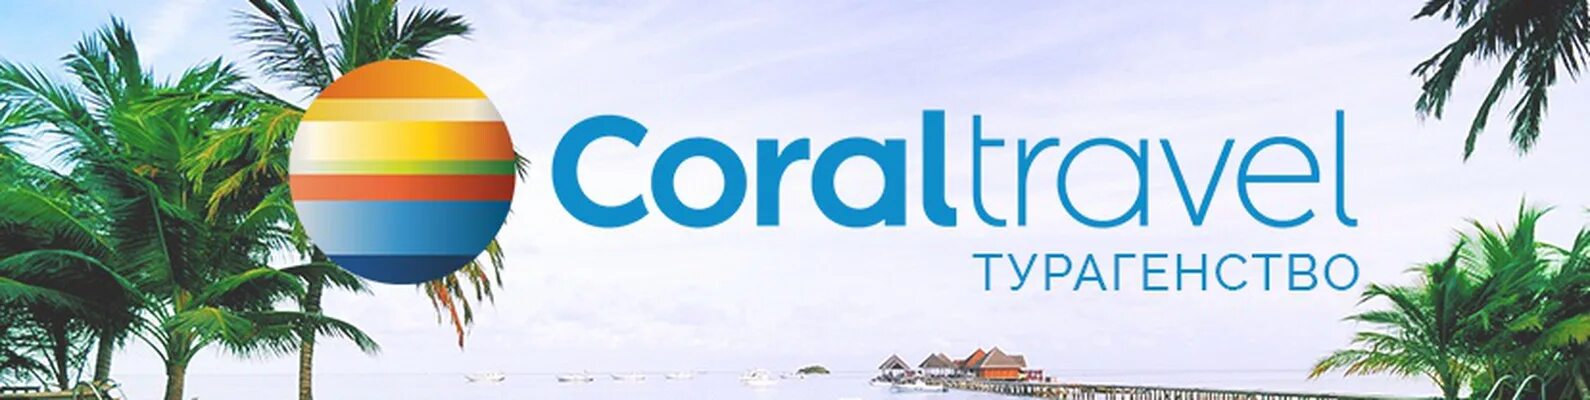 Coral спб. Туроператор Coral Travel логотип. Эмблема Корал Тревел туроператор. Coral Travel презентация. Турфирмы Корал Тревел логотип.